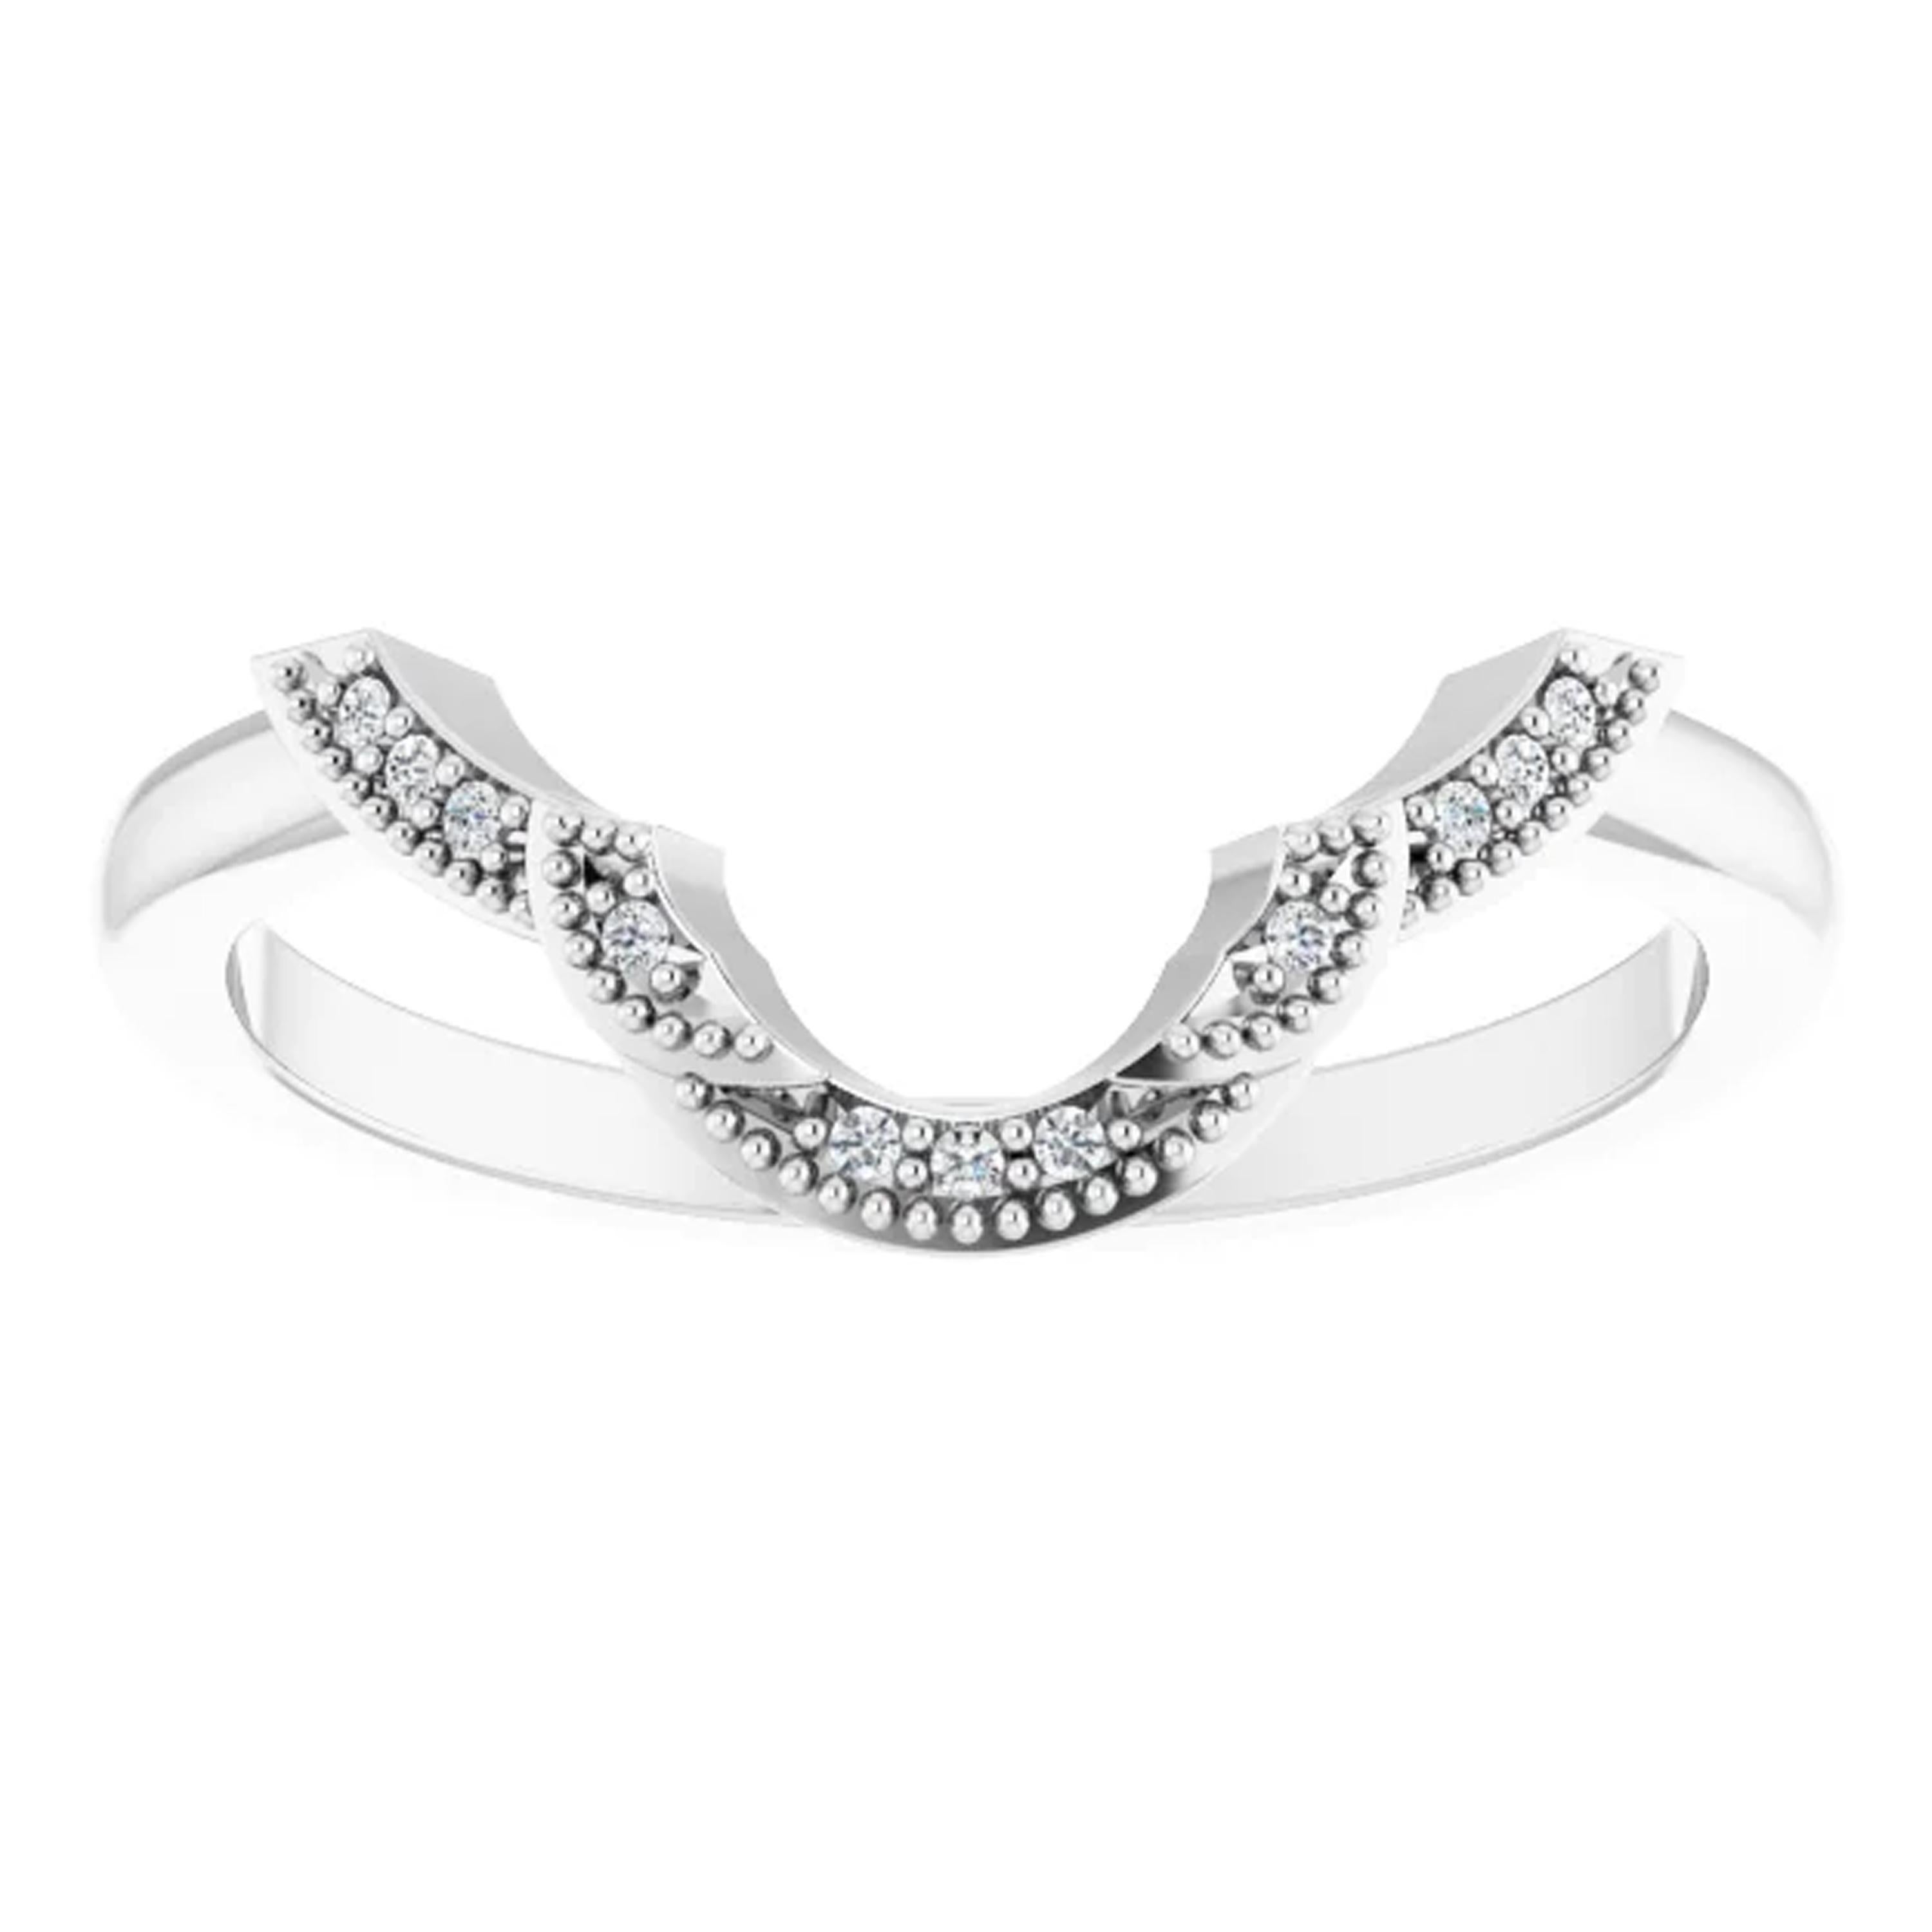 Oval Cut Vintage Style Halo Garnet January Birthstone Wedding Ring Set 18k White Gold For Sale